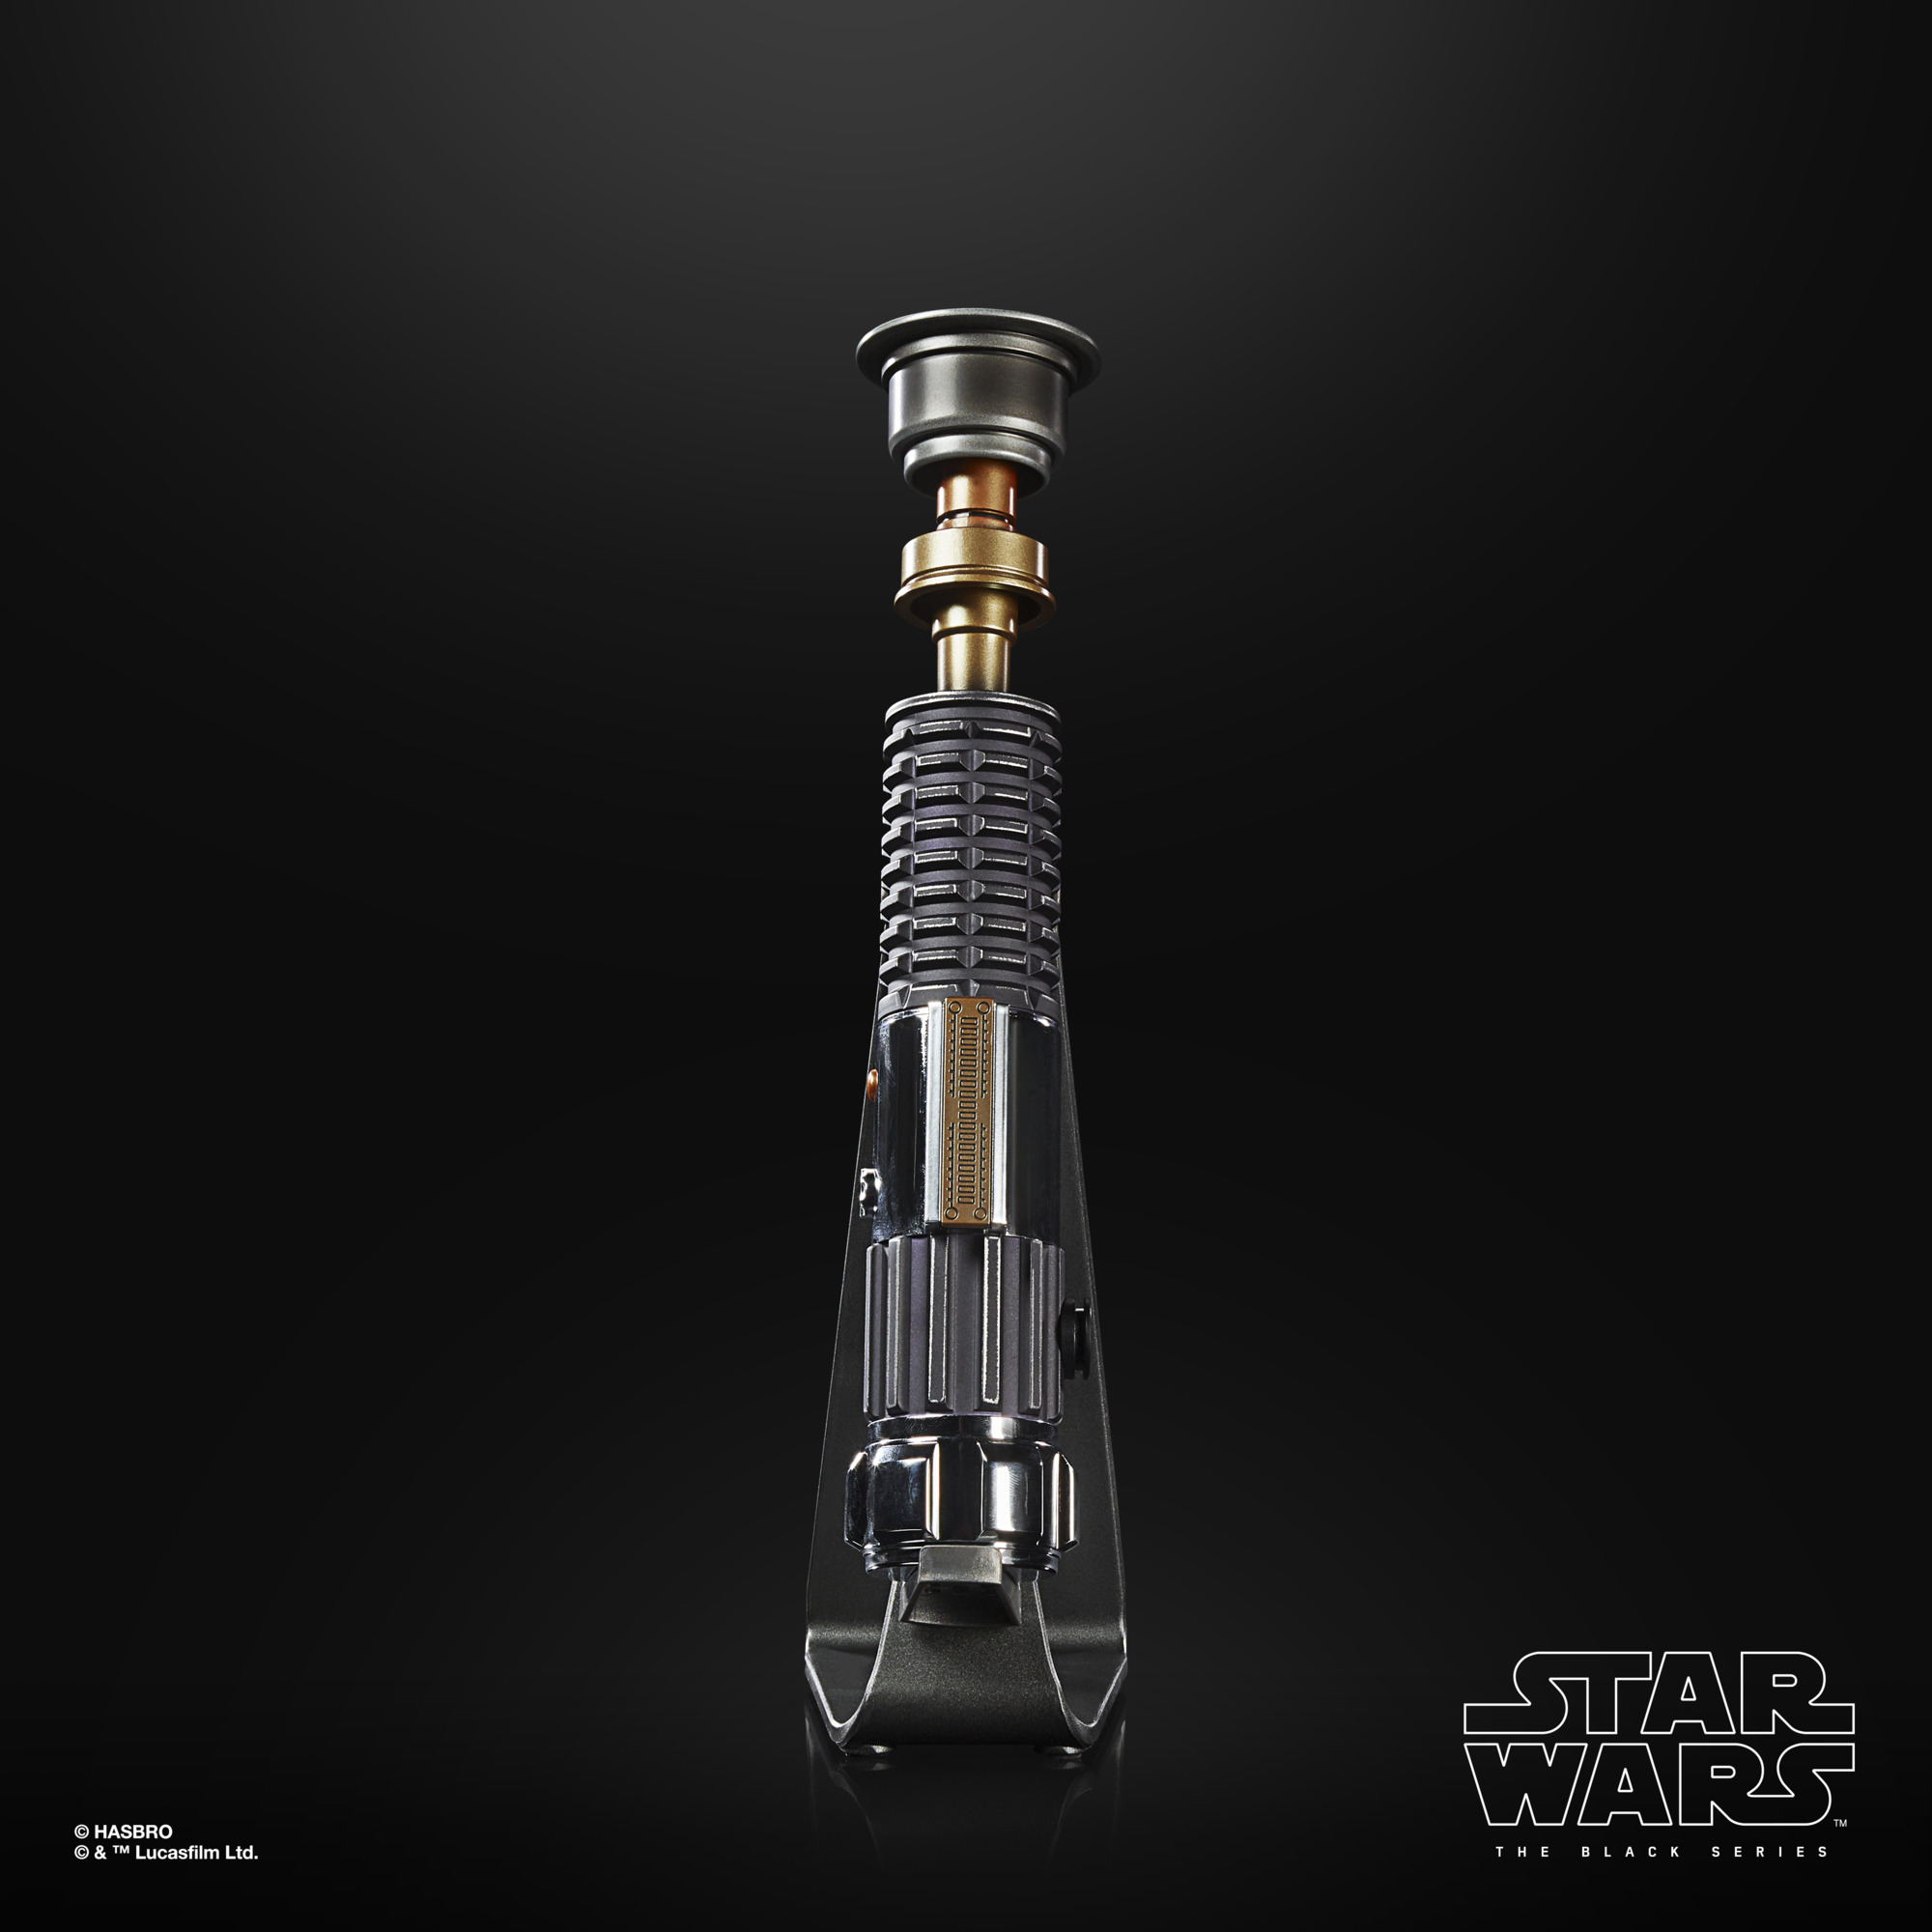 Star Wars The Black Series Obi-Wan Kenobi Force FX Elite Lightsaber F39065L00 5010994152109